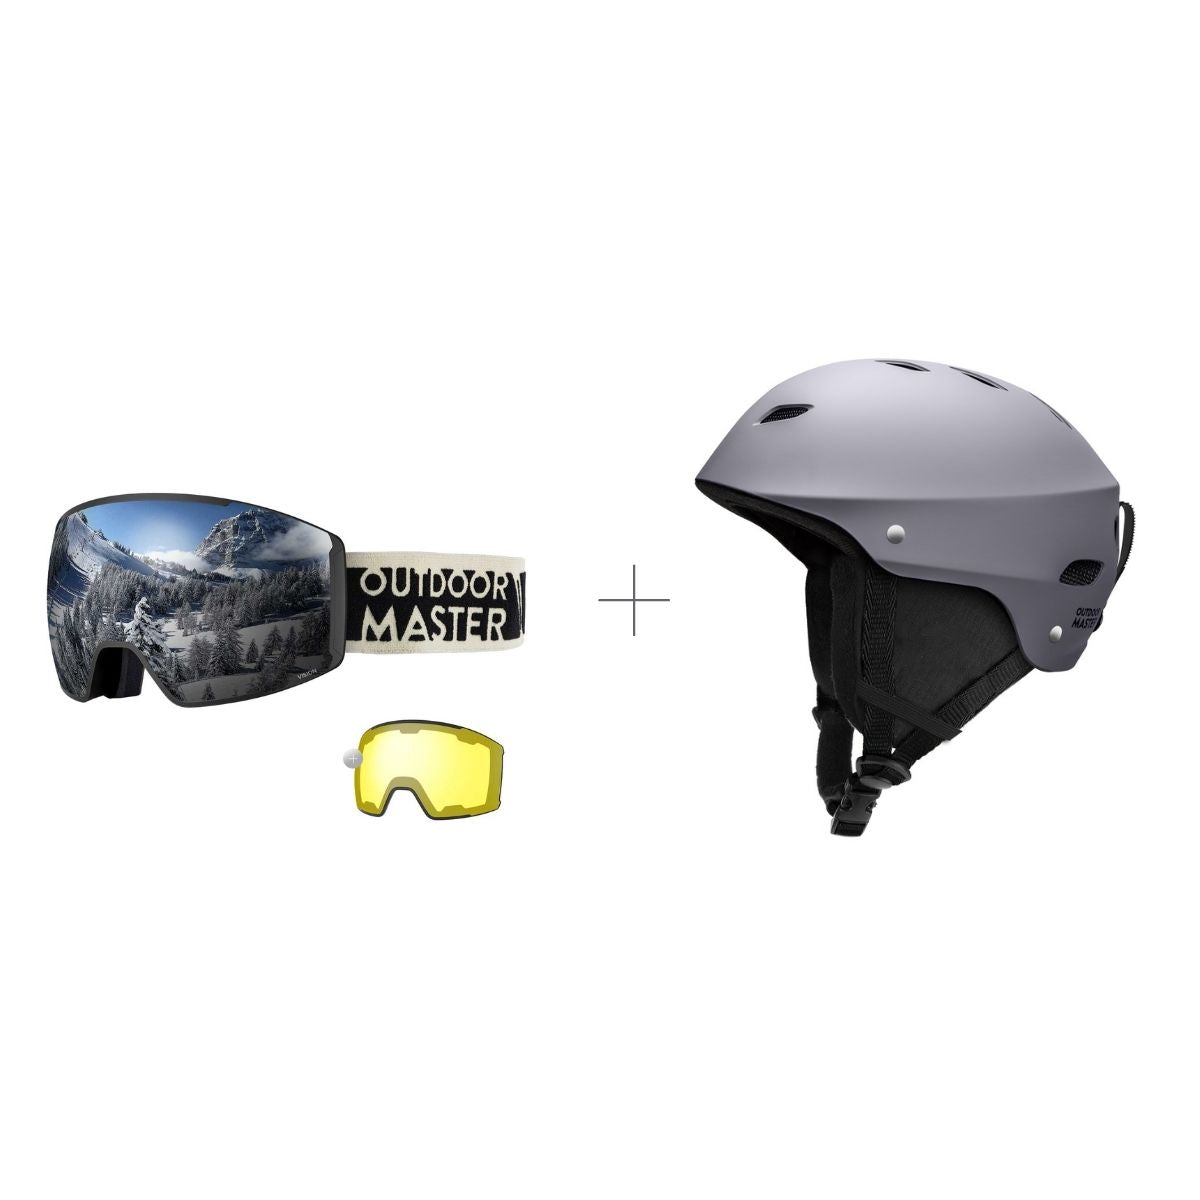 Bundle Sale - Vision Goggle + Lens + Kelvin Helmet